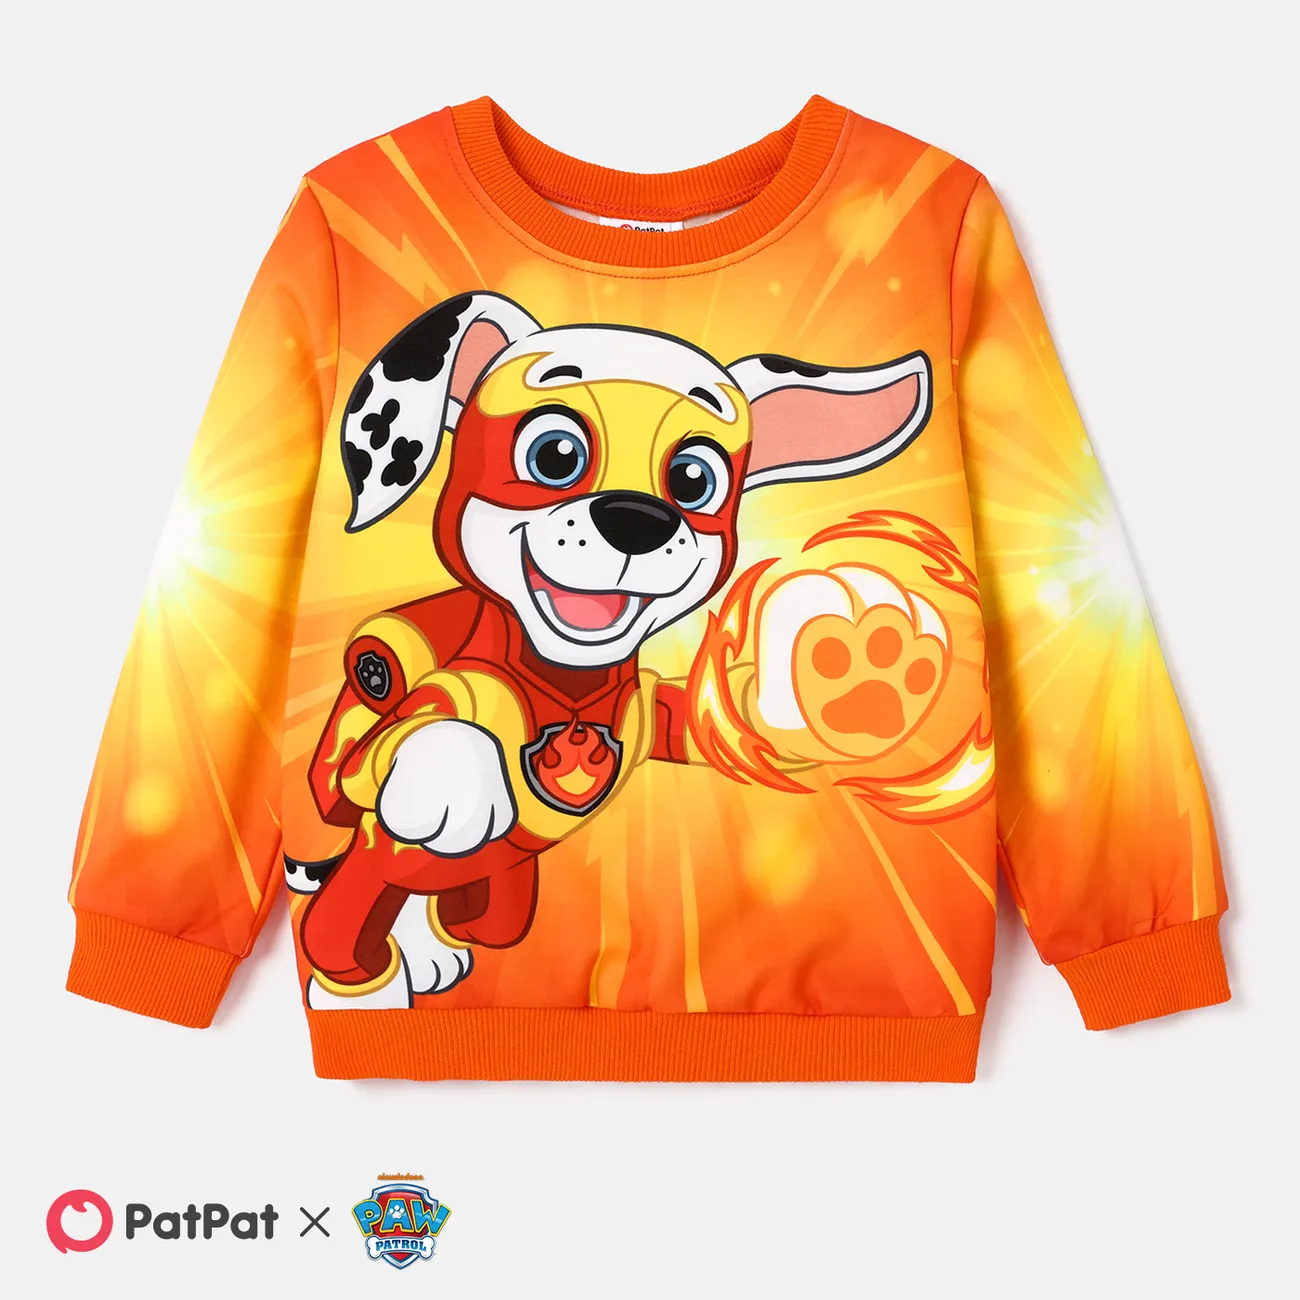 PAW Patrol Toddler Girl/Boy Character Only Mobile بات Print Sweatshirt Pattern بات د.ب.‏ Long-sleeve 5.40